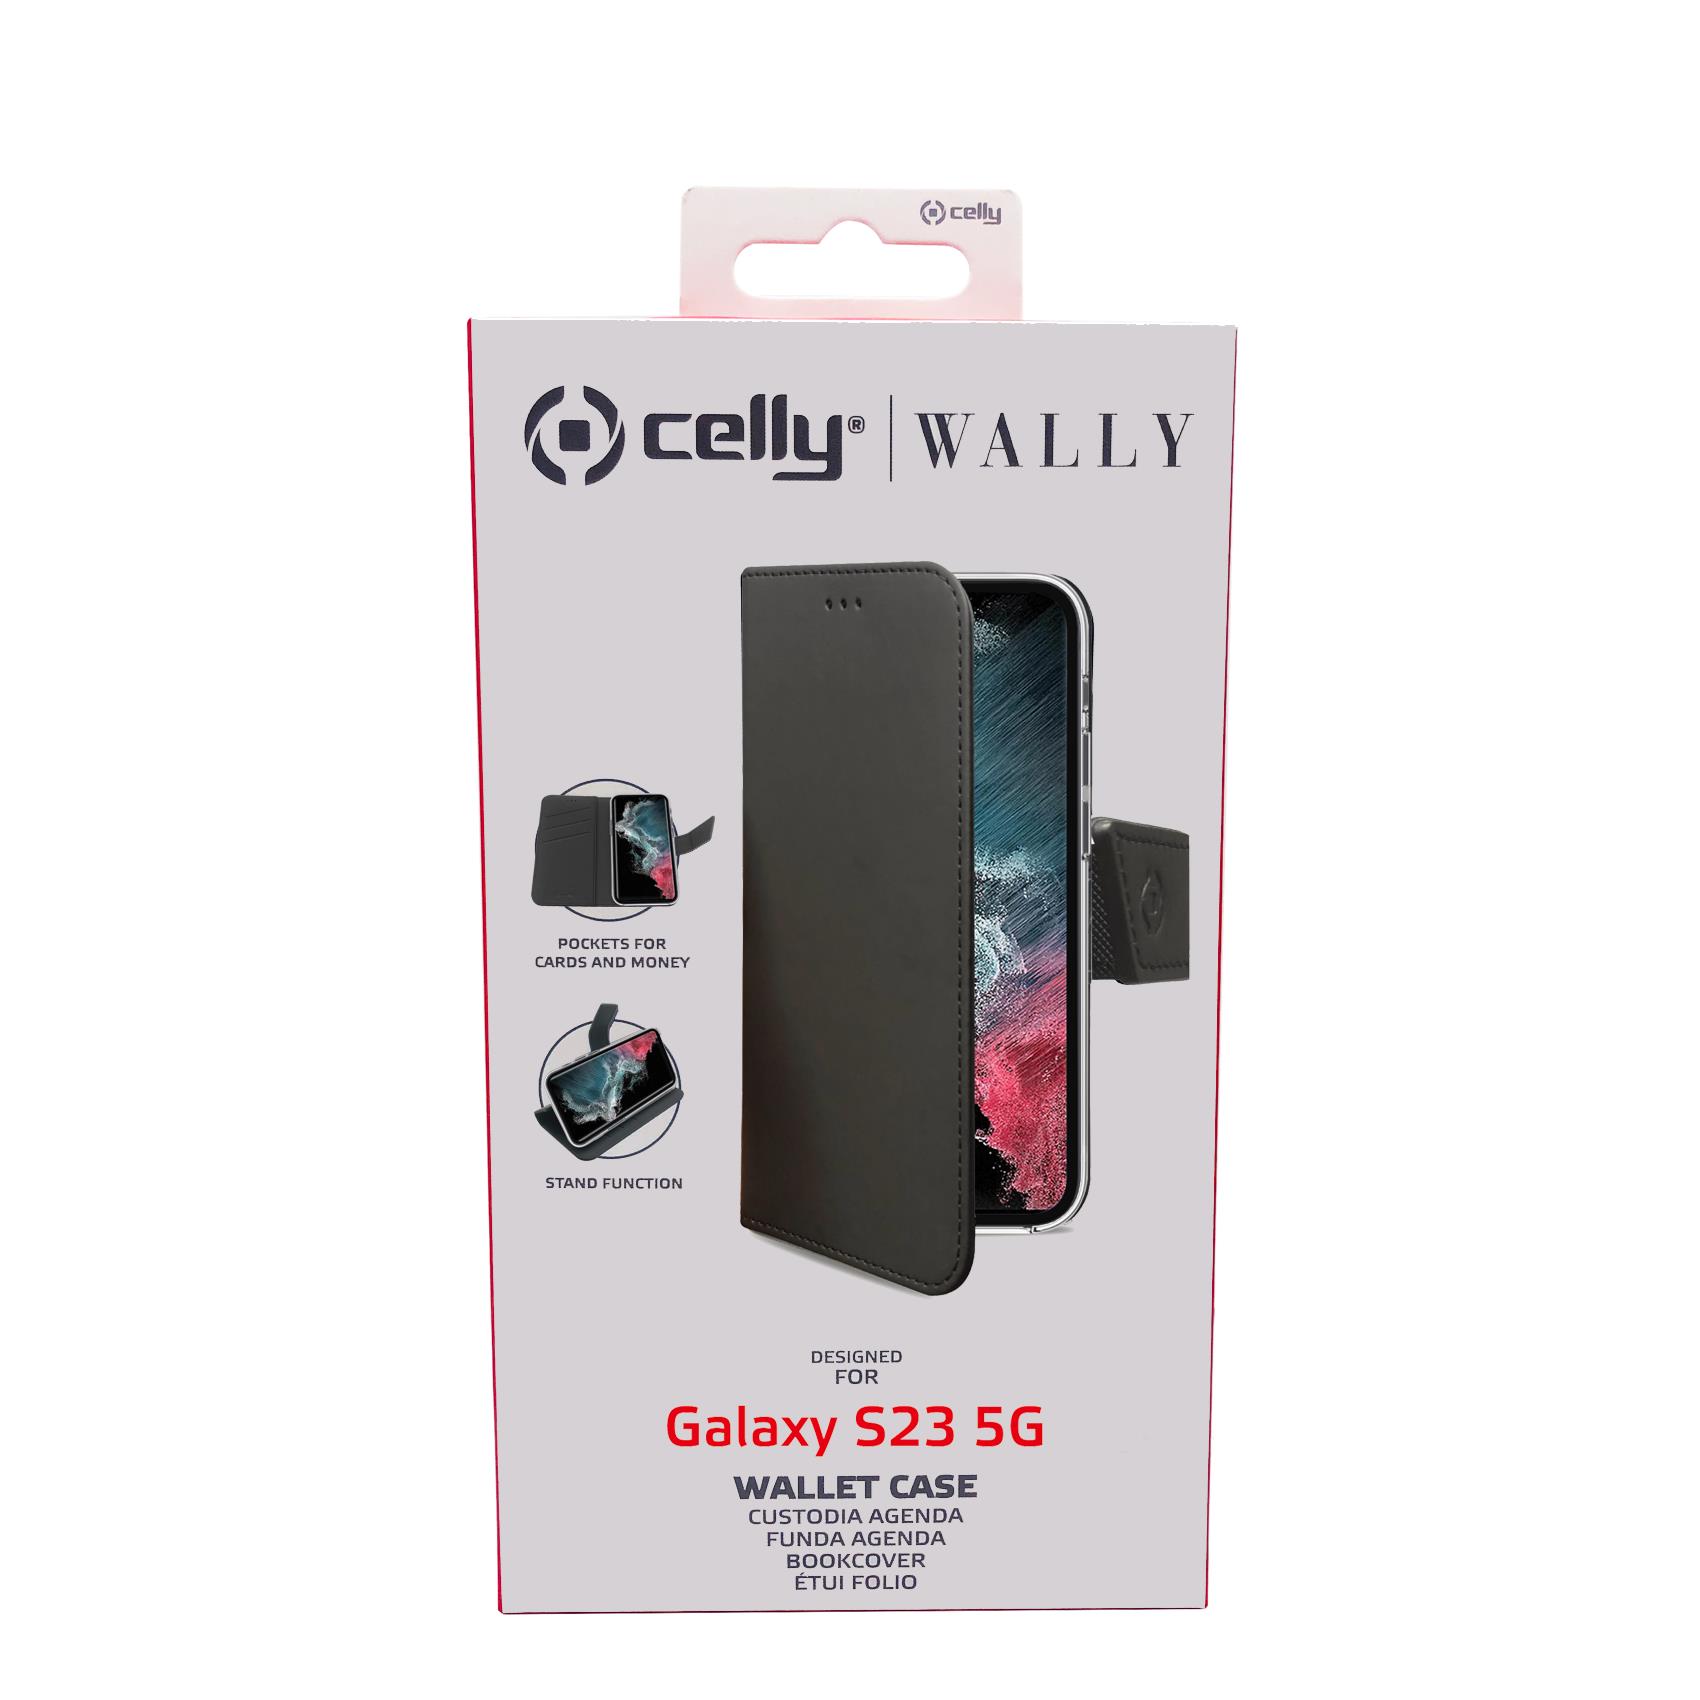 Custodia Celly Samsung S23 5G wallet case black WALLY1032